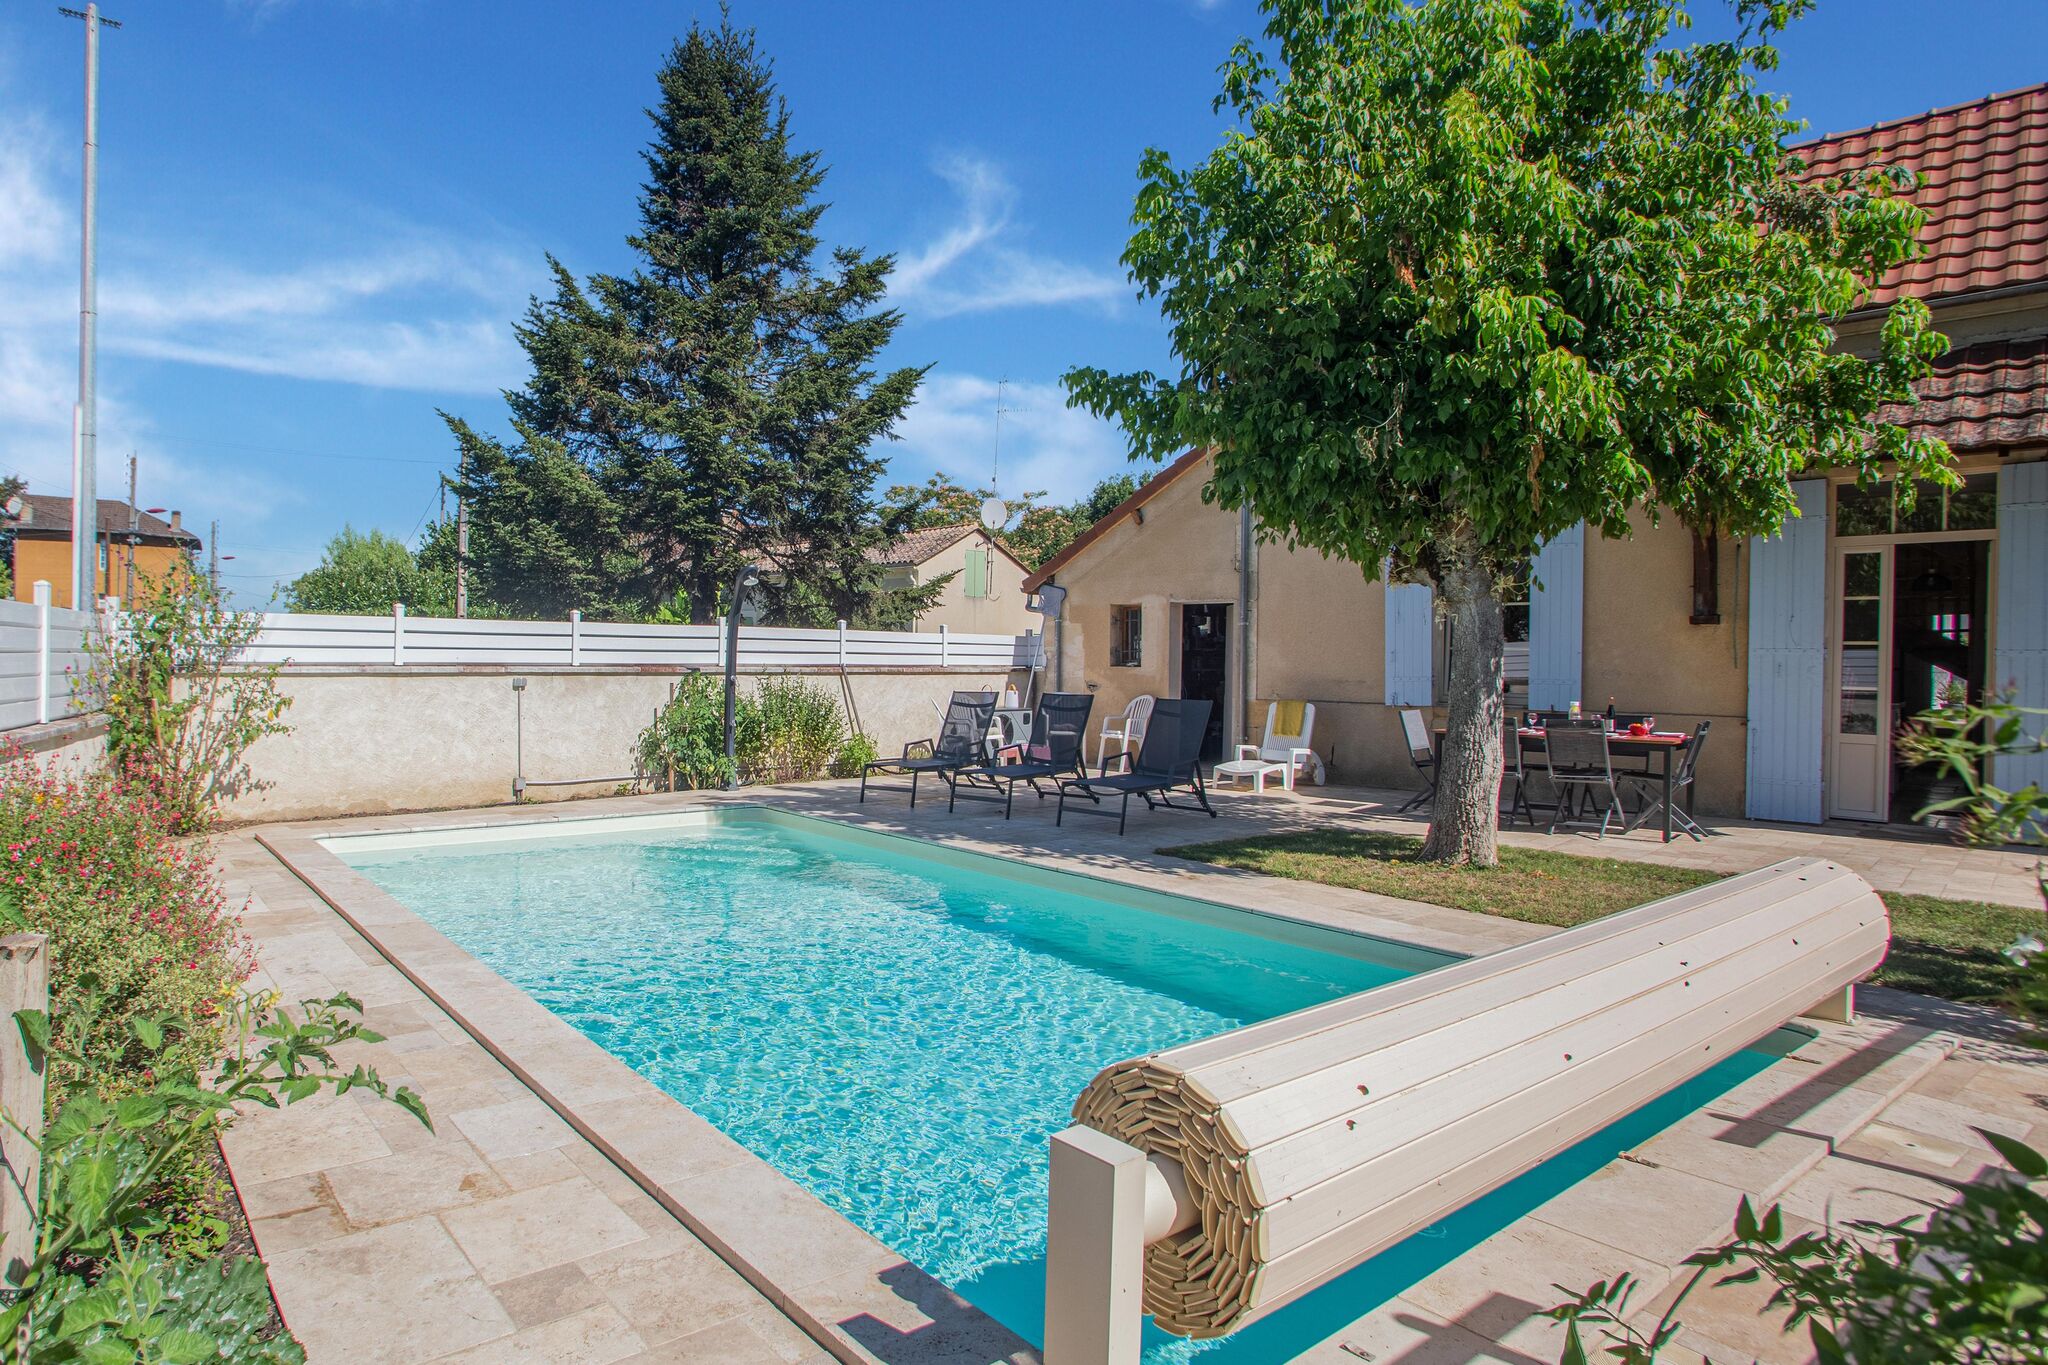 Maison de vacances spacieuse à Bergerac avec piscine privée